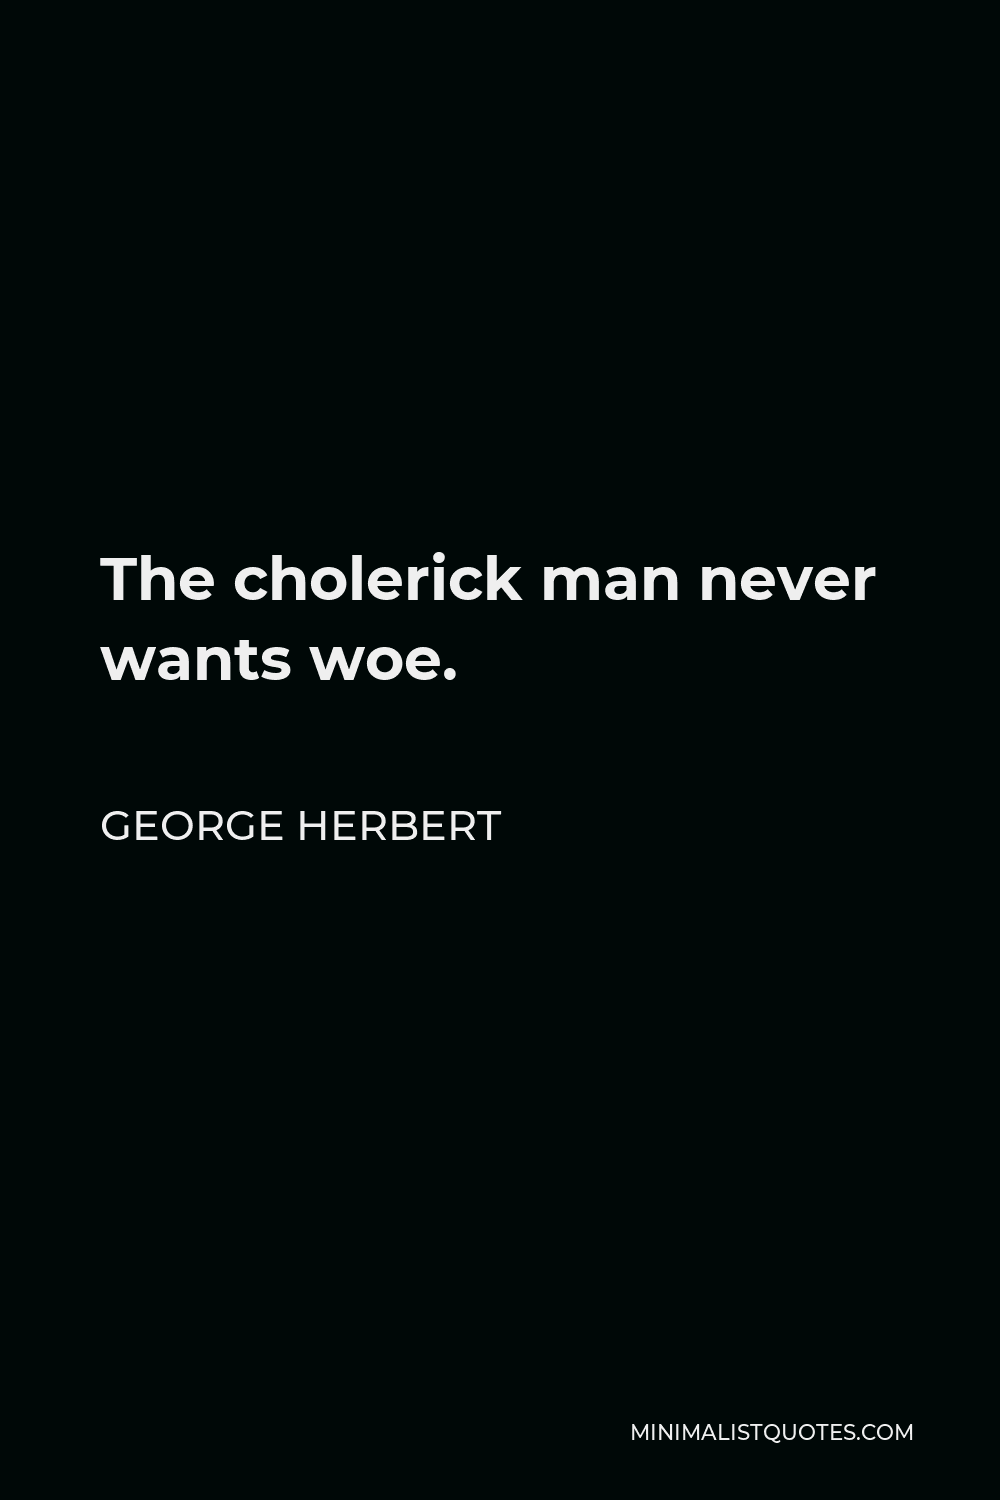 George Herbert Quote - The cholerick man never wants woe.